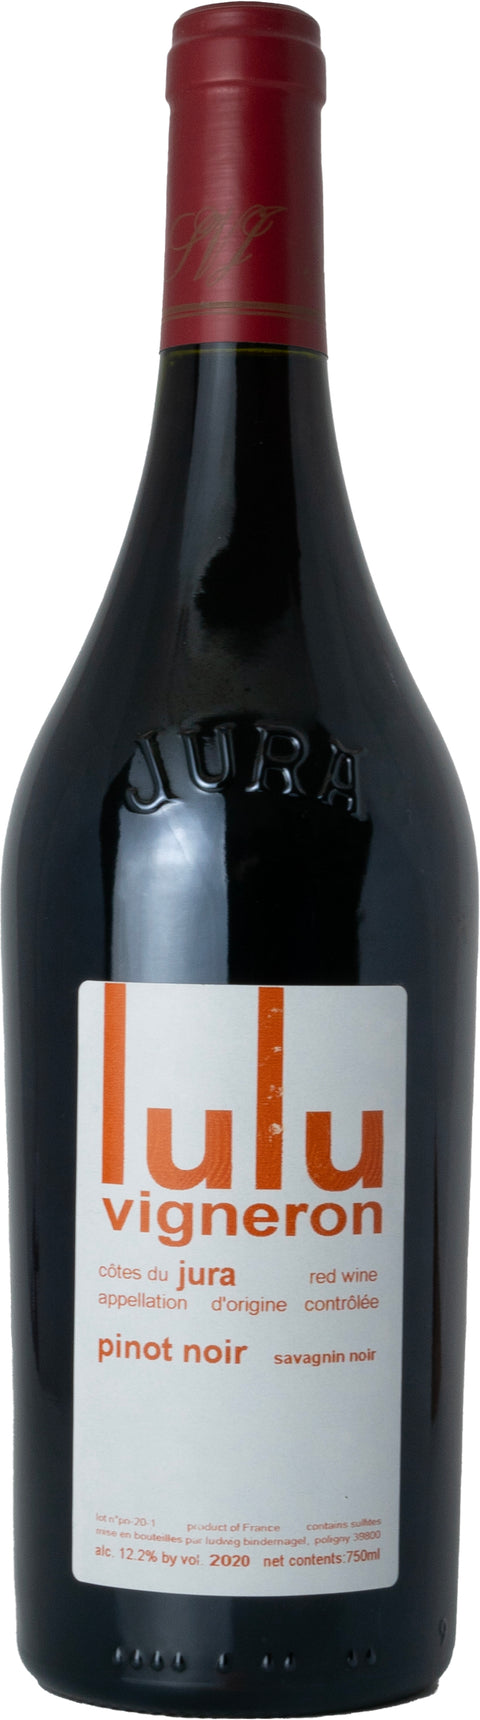 Pinot Noir - Lulu Vigneron - 2020